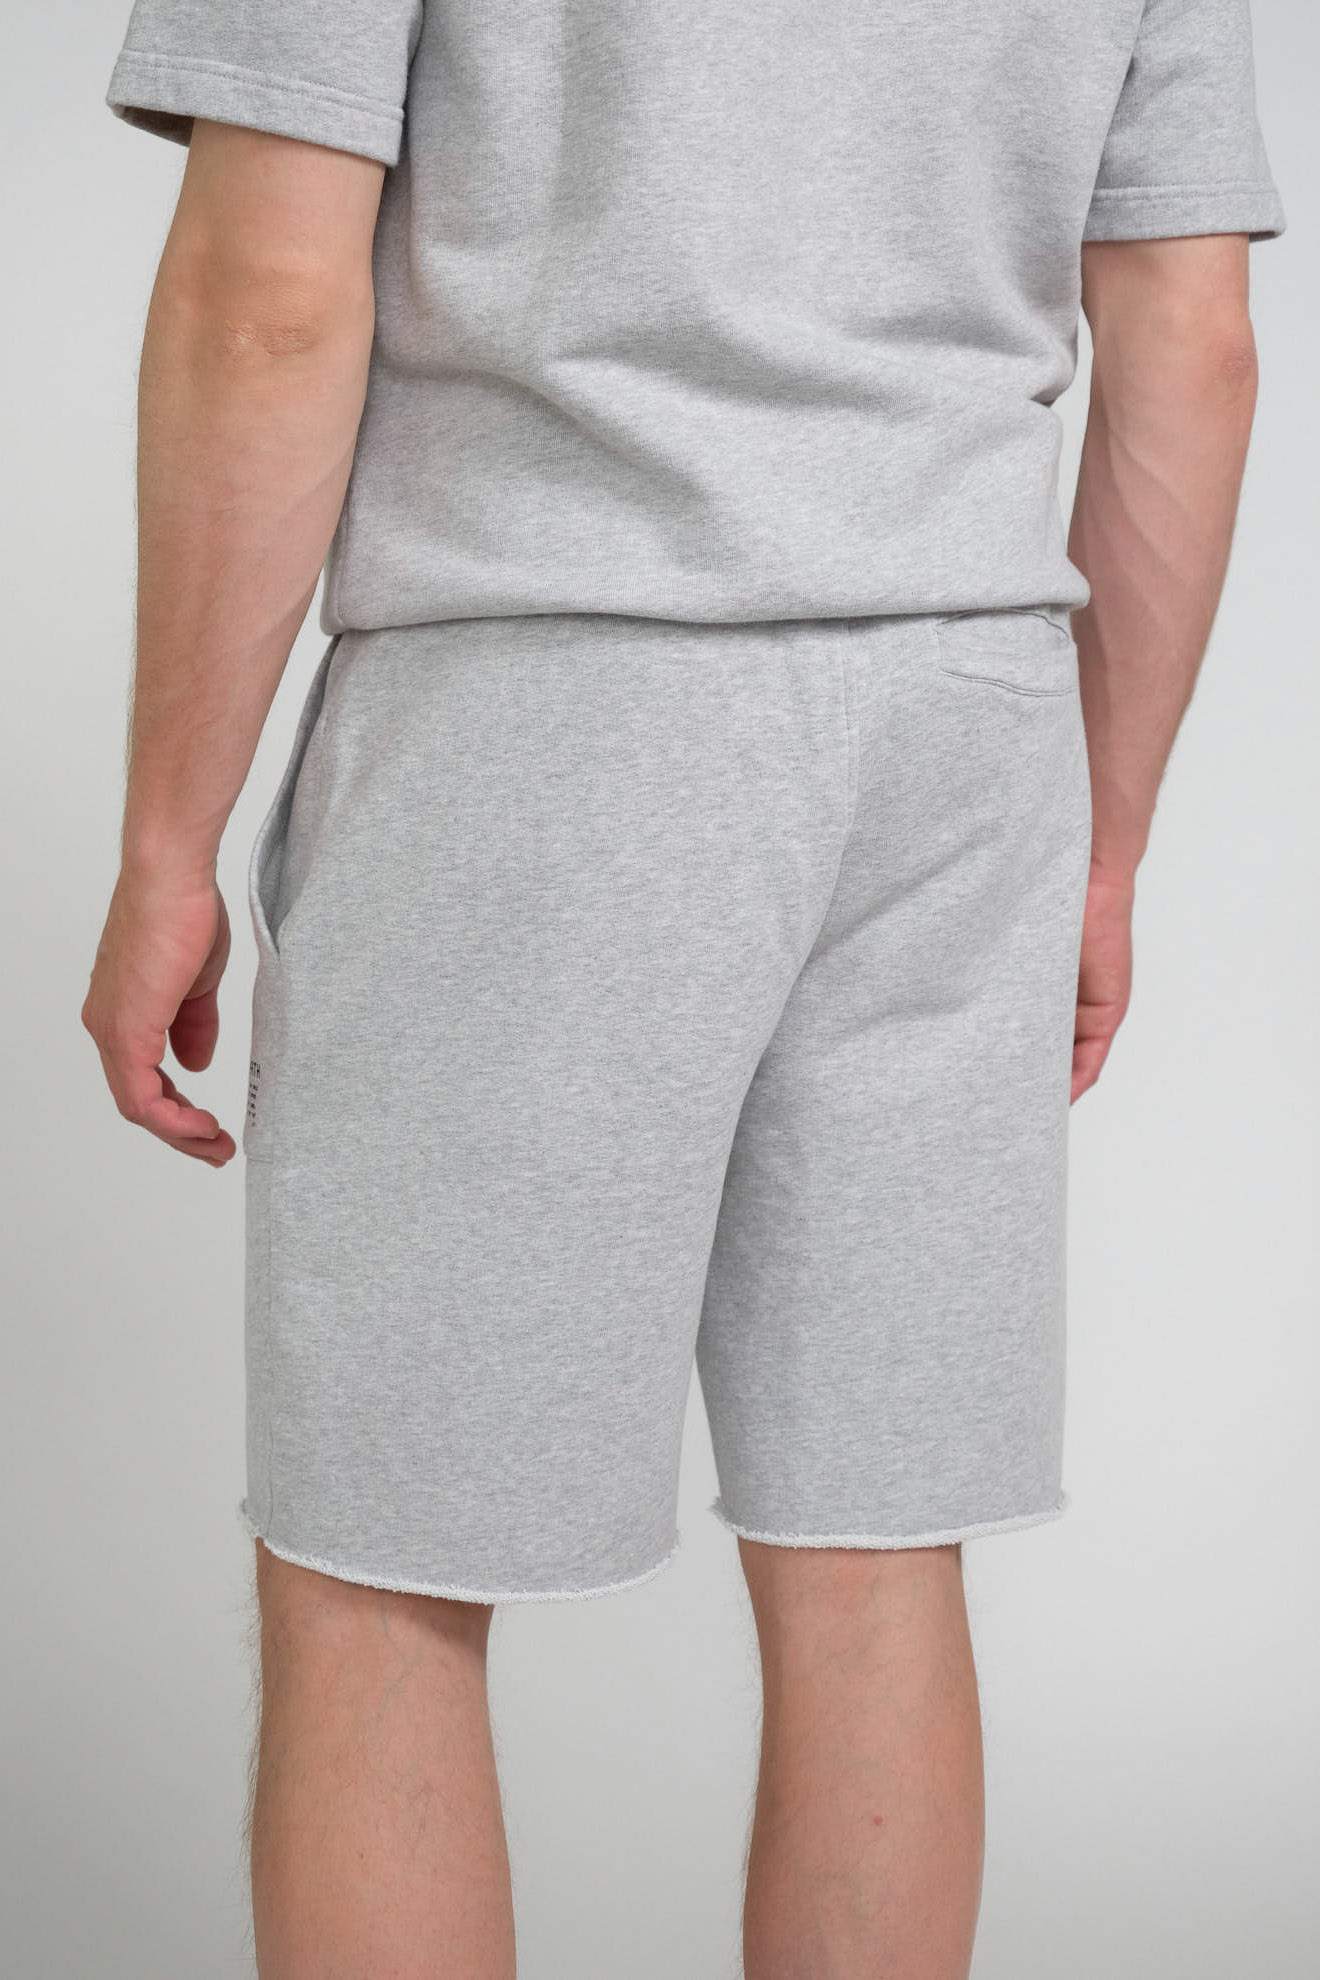 st.barth shorts grey branded cotton model back